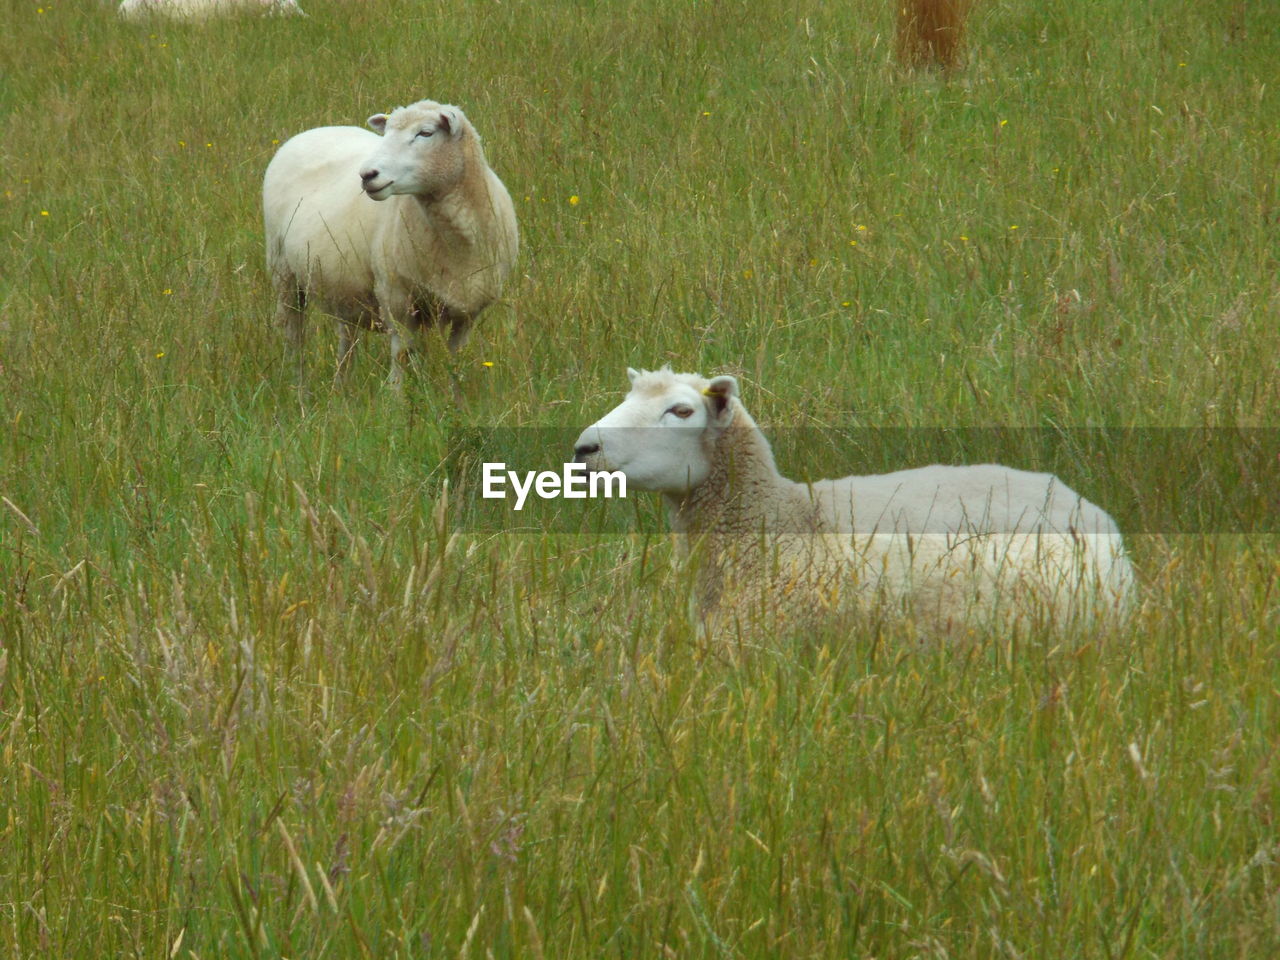 SHEEP ON GRASS